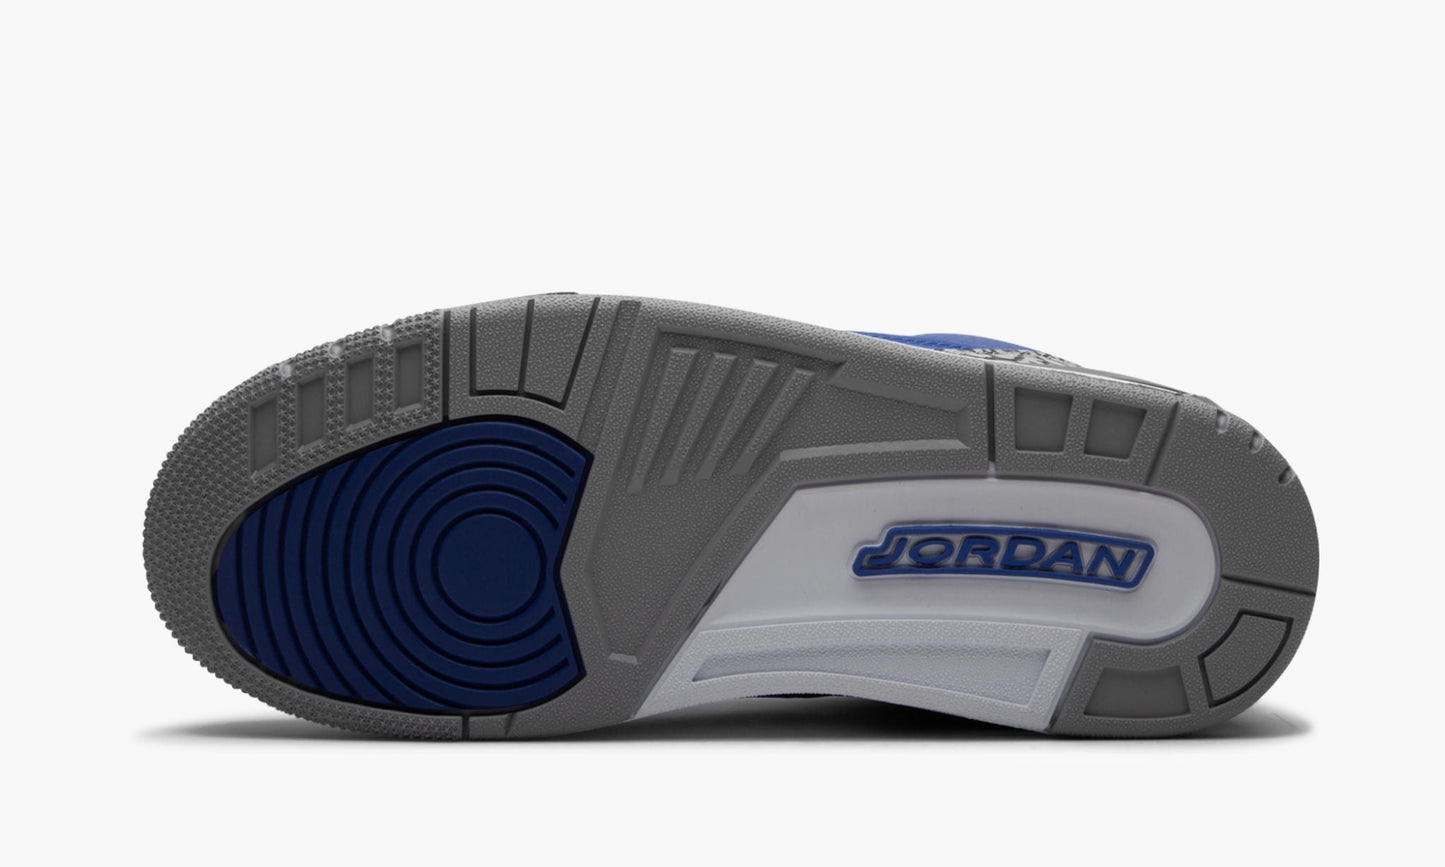 Air Jordan 3 Retro "Blue Cement"